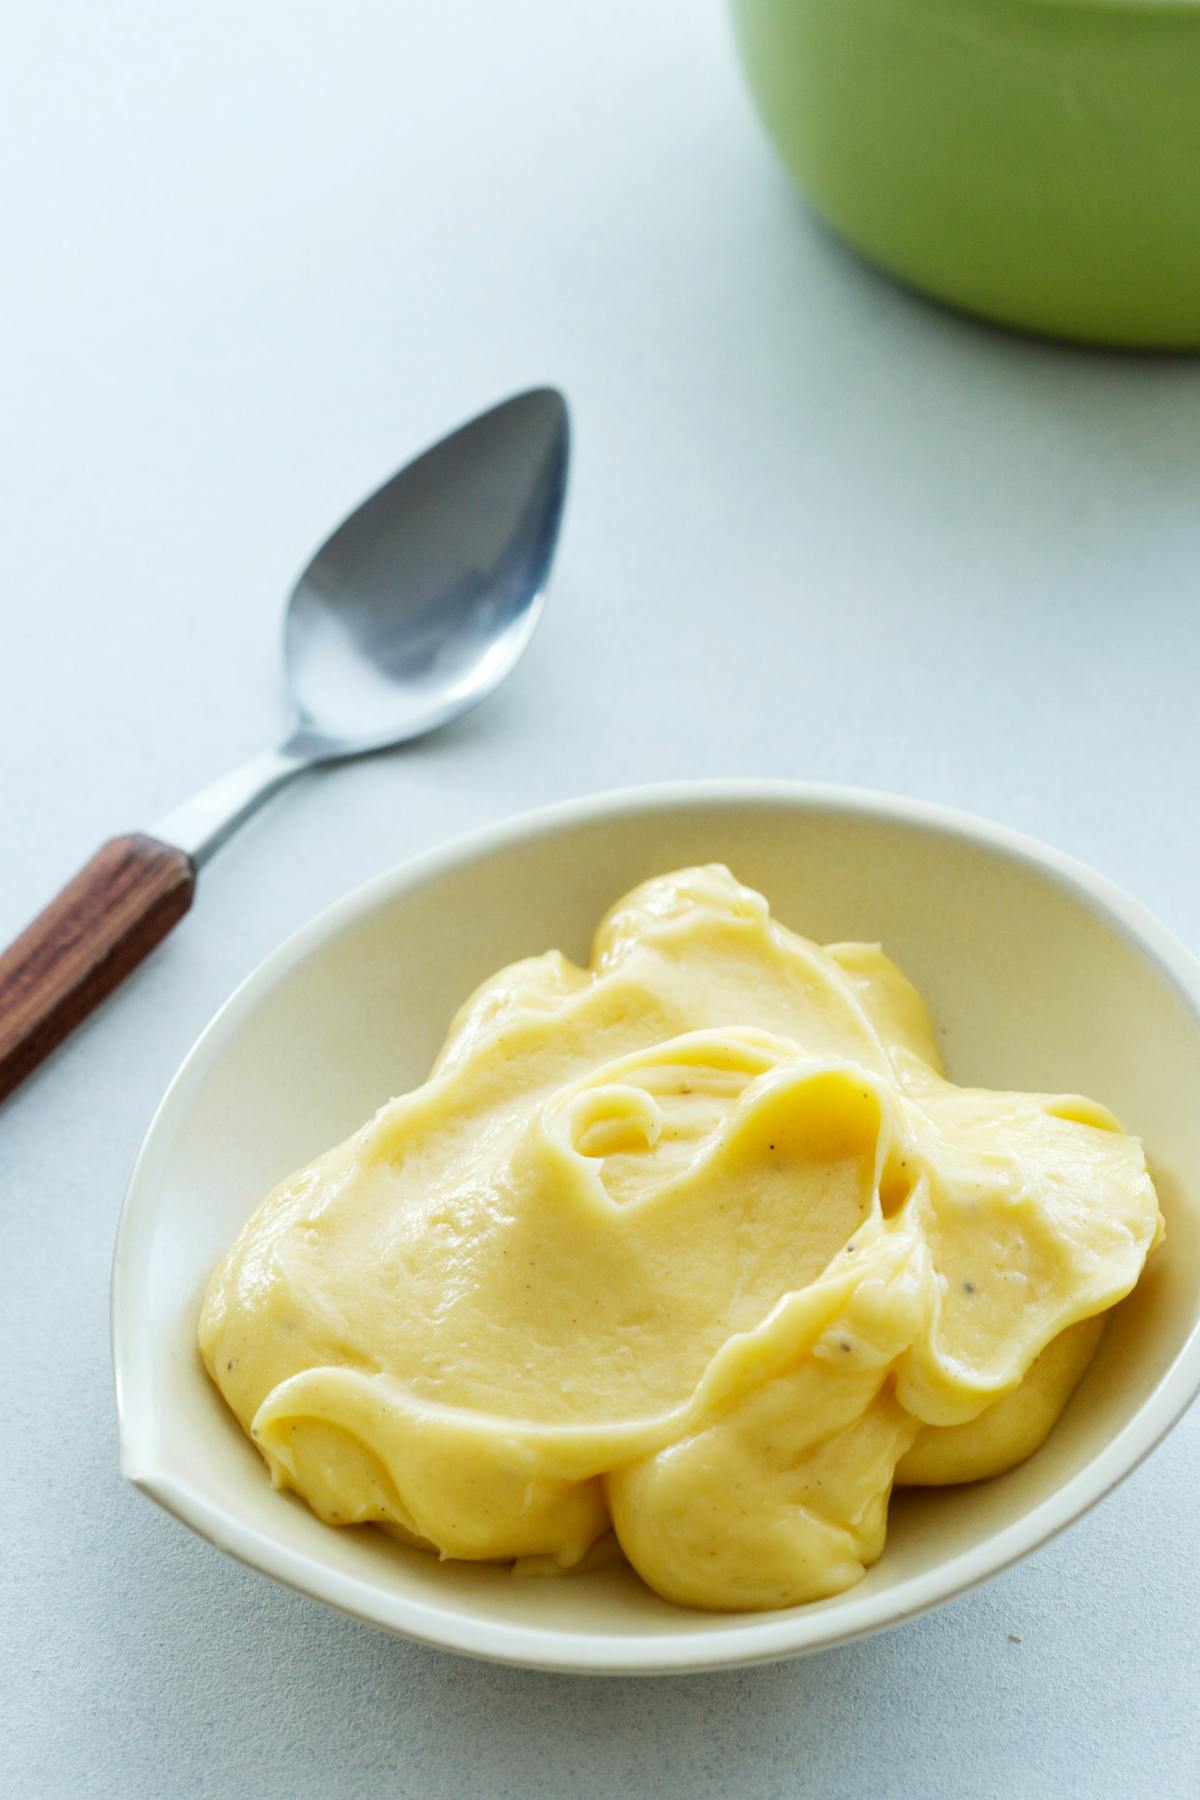 Butter mayonnaise